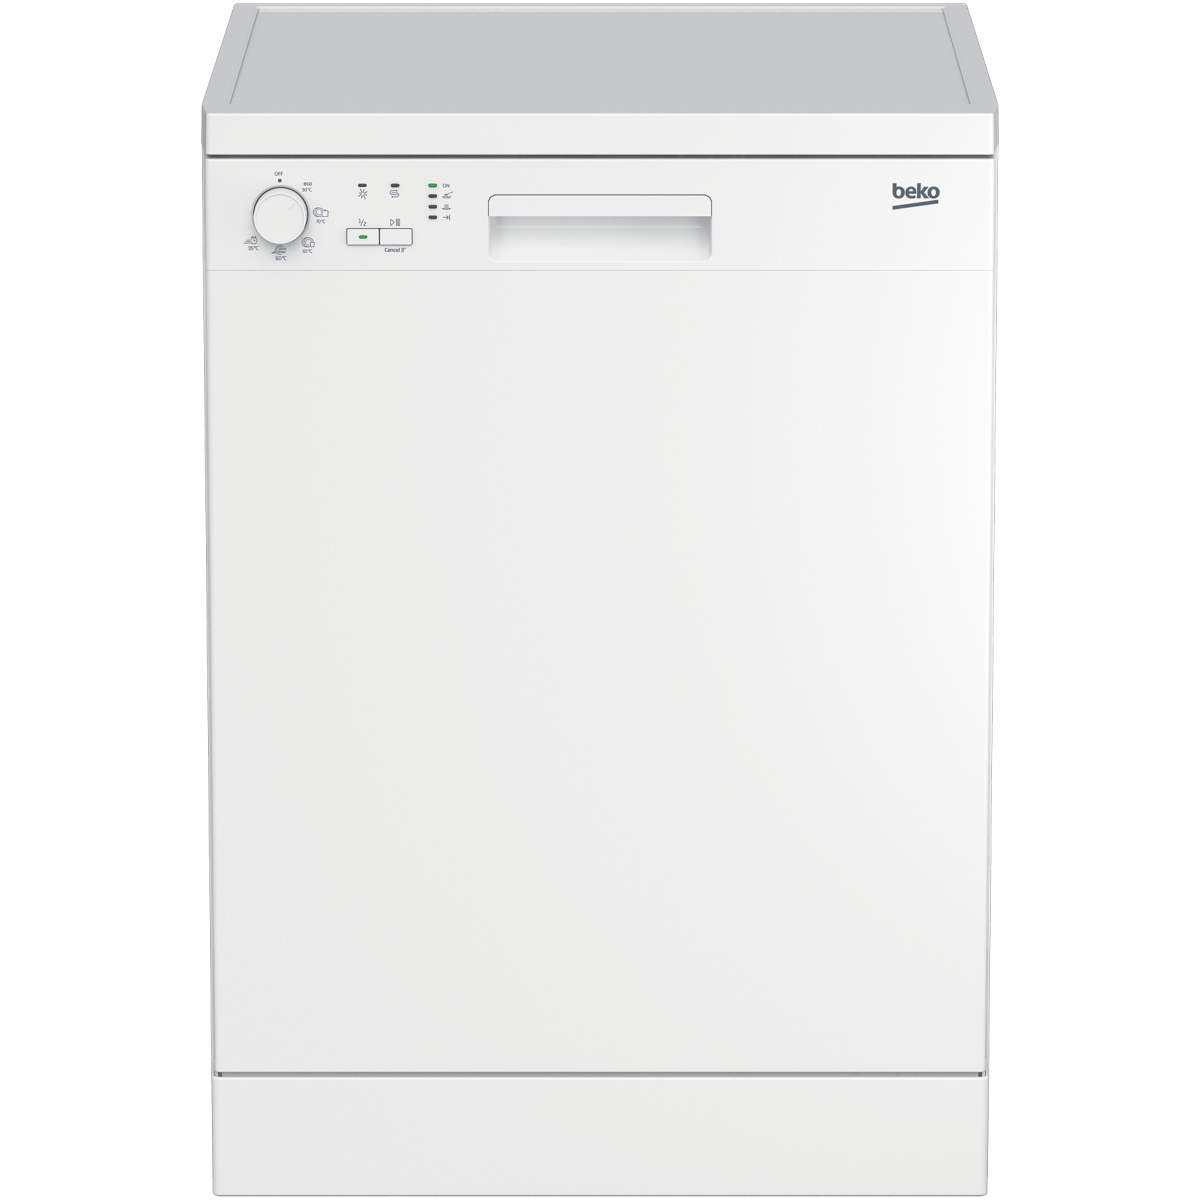 Beko dishwasher DFN 05311W-JO white | Dish washer | Home Appliances